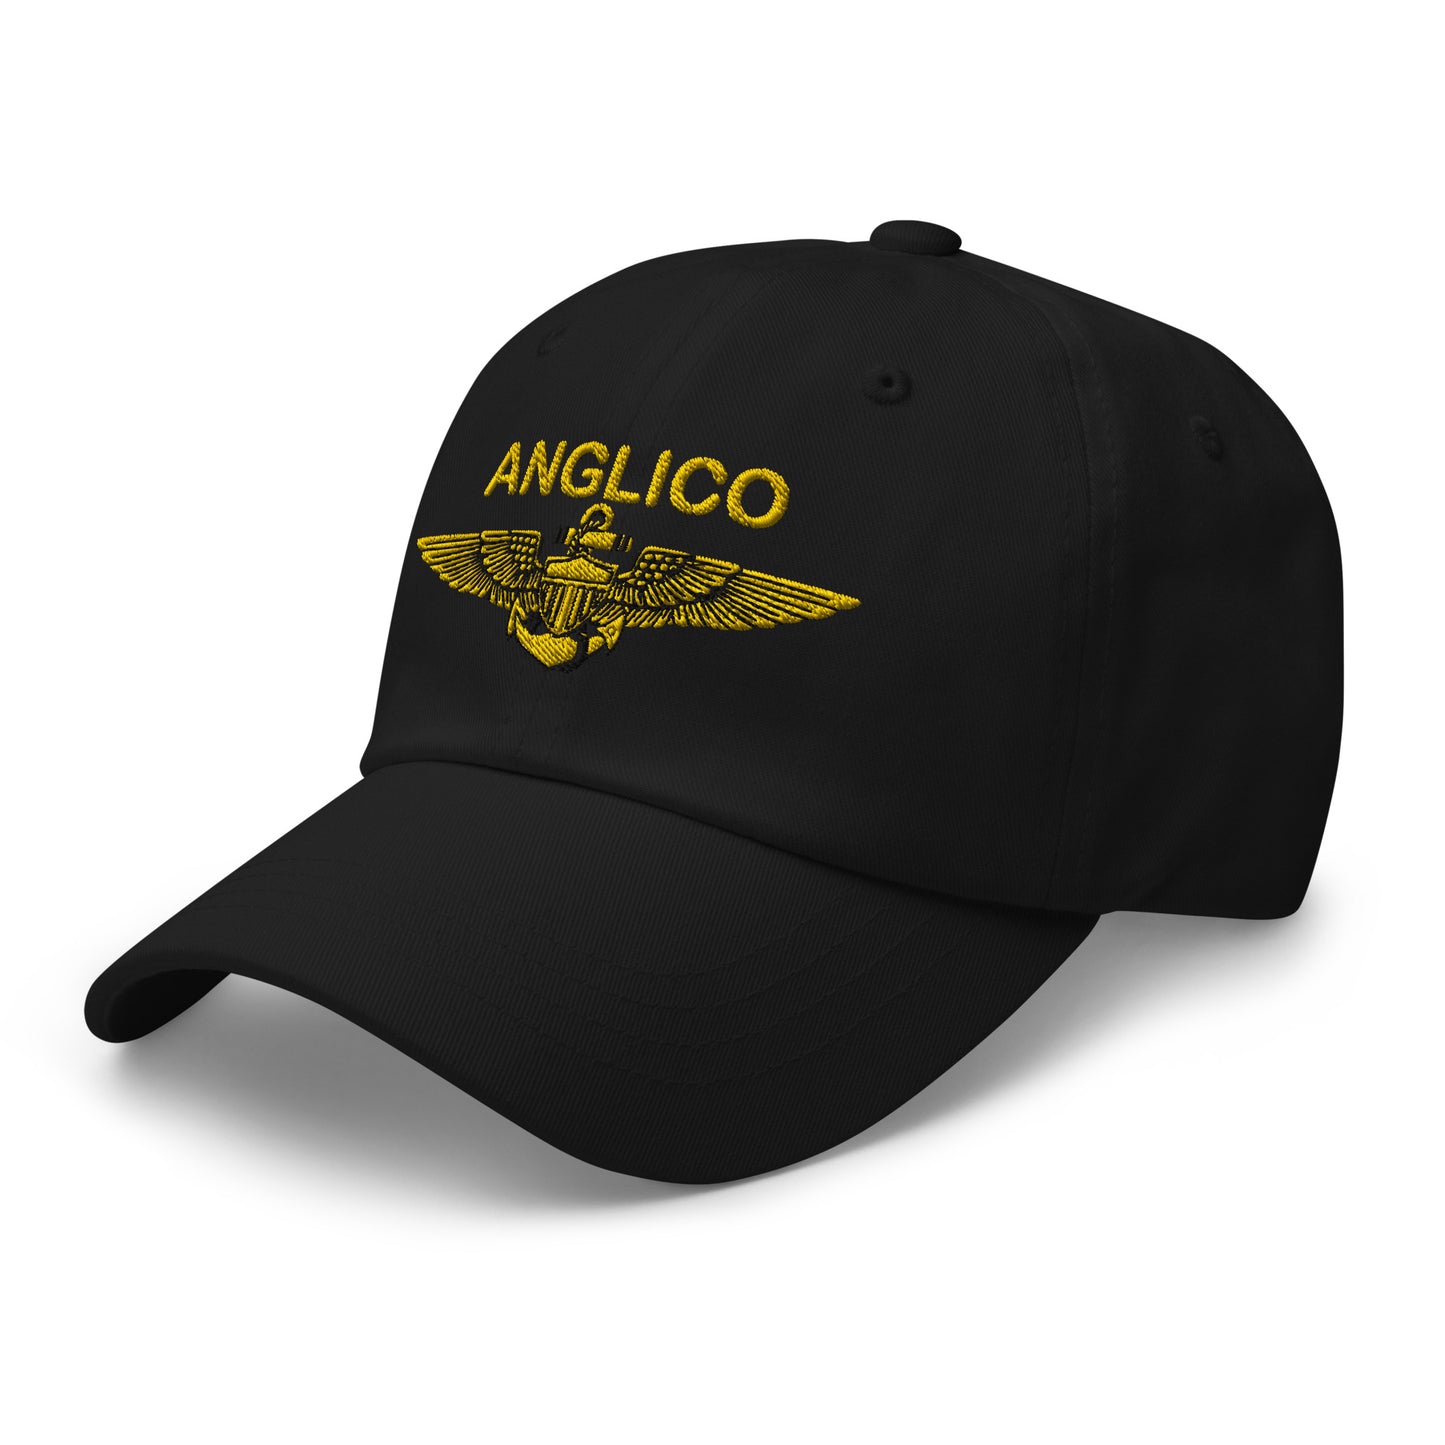 ANGLICO Naval Aviator Hat